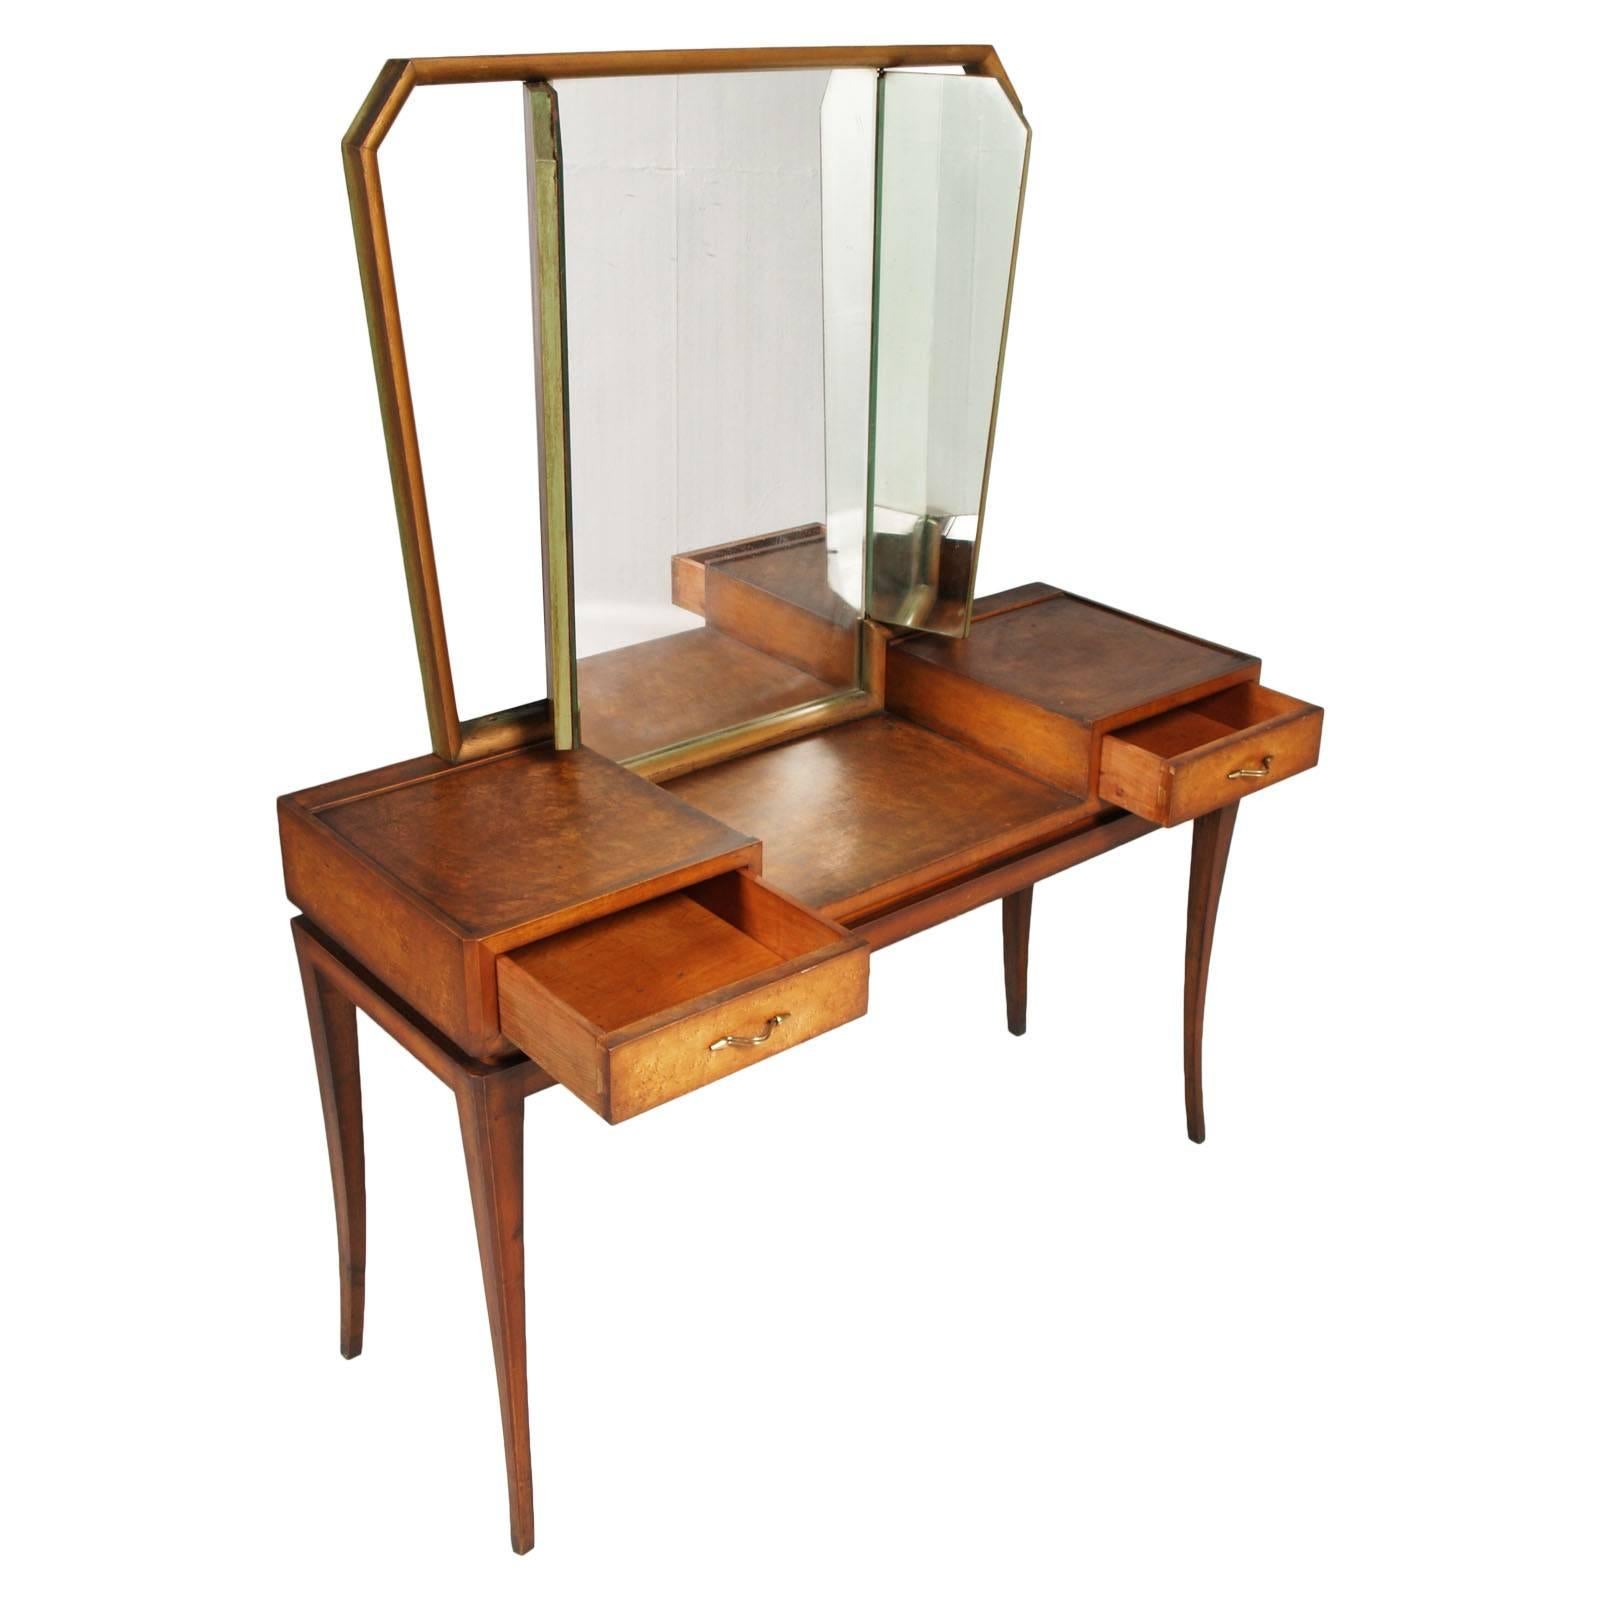 Art Nouveau Early 20th Century Modernist Vanity or Dressing Table, Meroni & Fossati Lissone